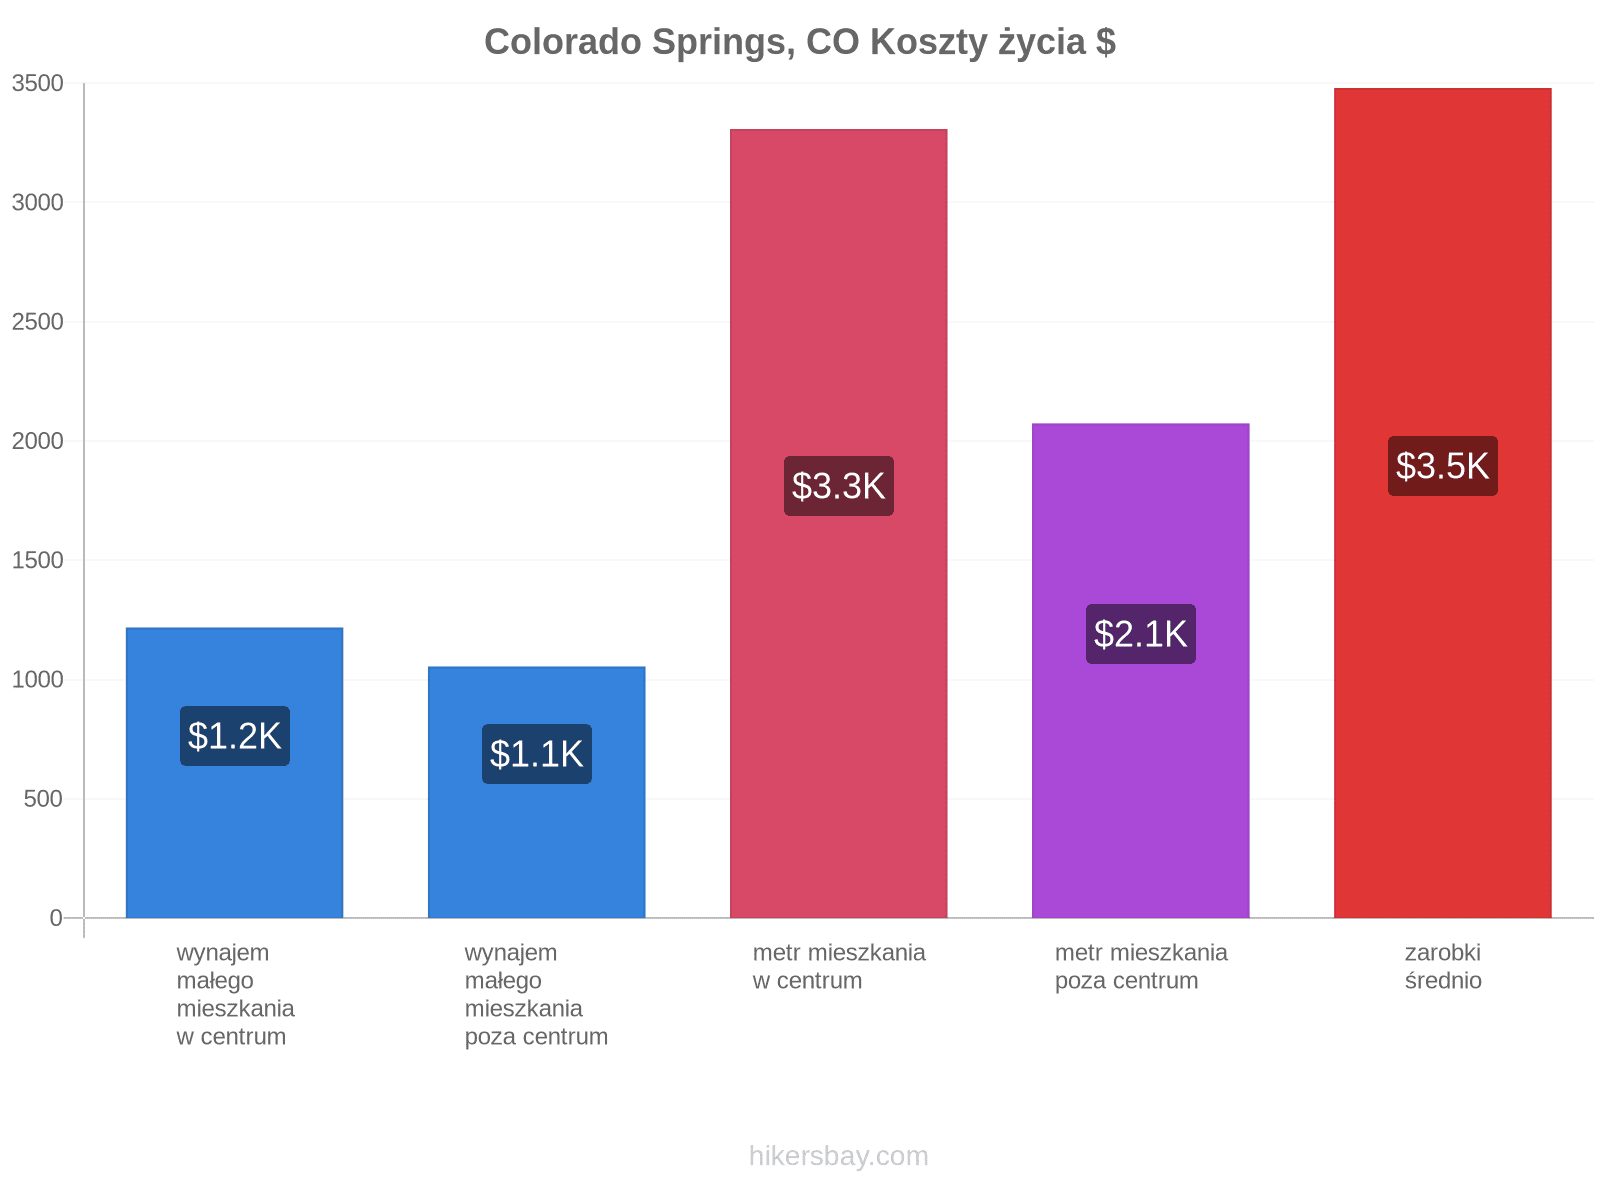 Colorado Springs, CO koszty życia hikersbay.com